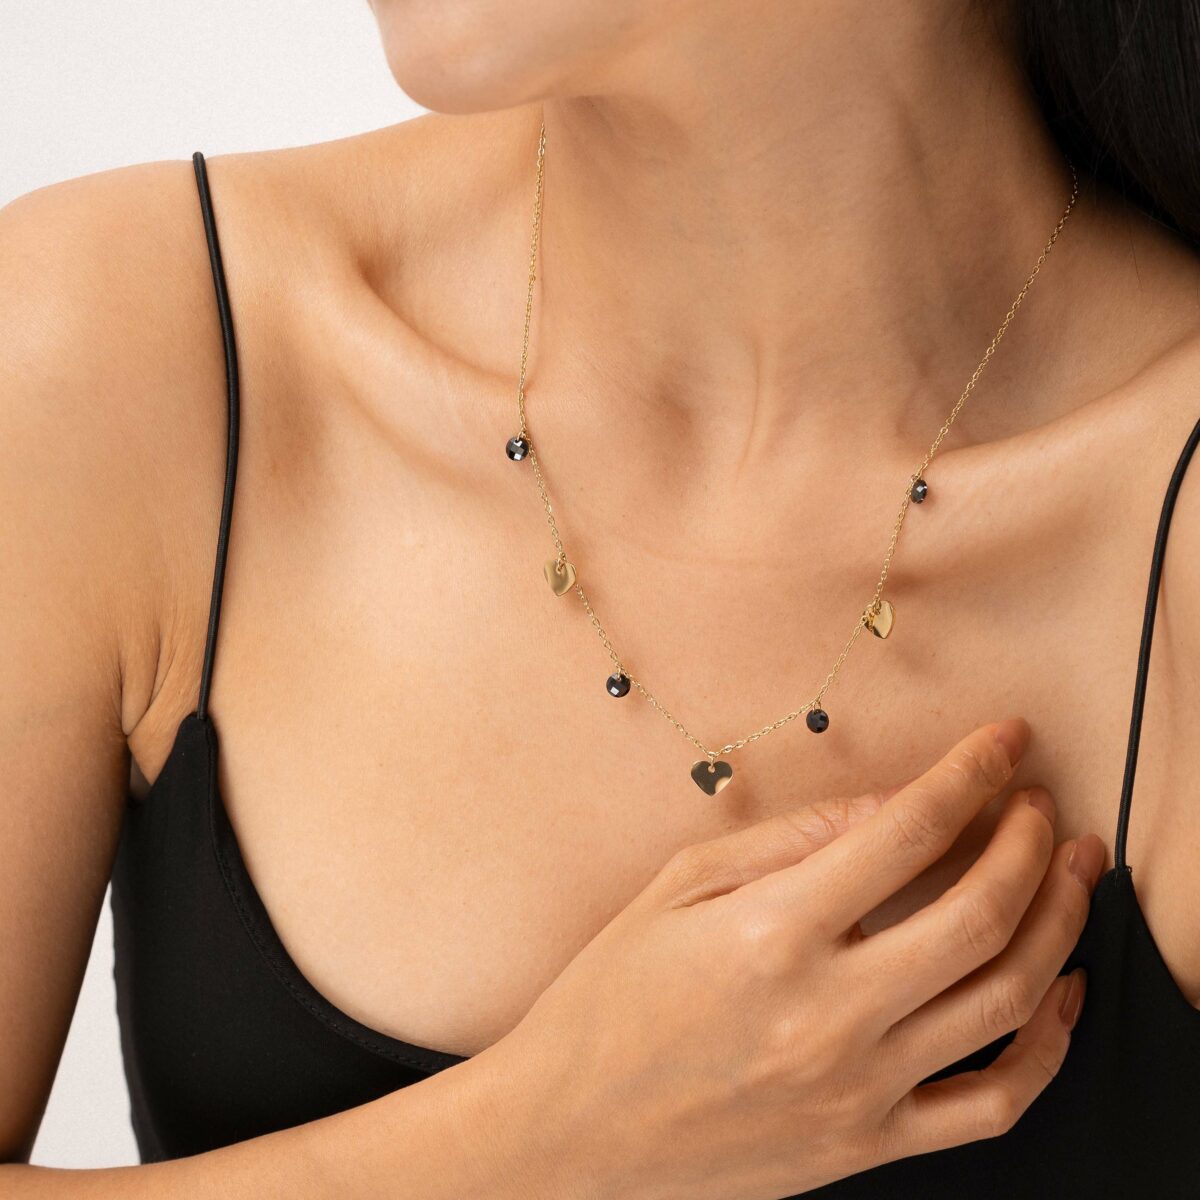 https://m.clubbella.co/product/dark-bloom-necklace/ DARK BLOOM NECKLACE (2)